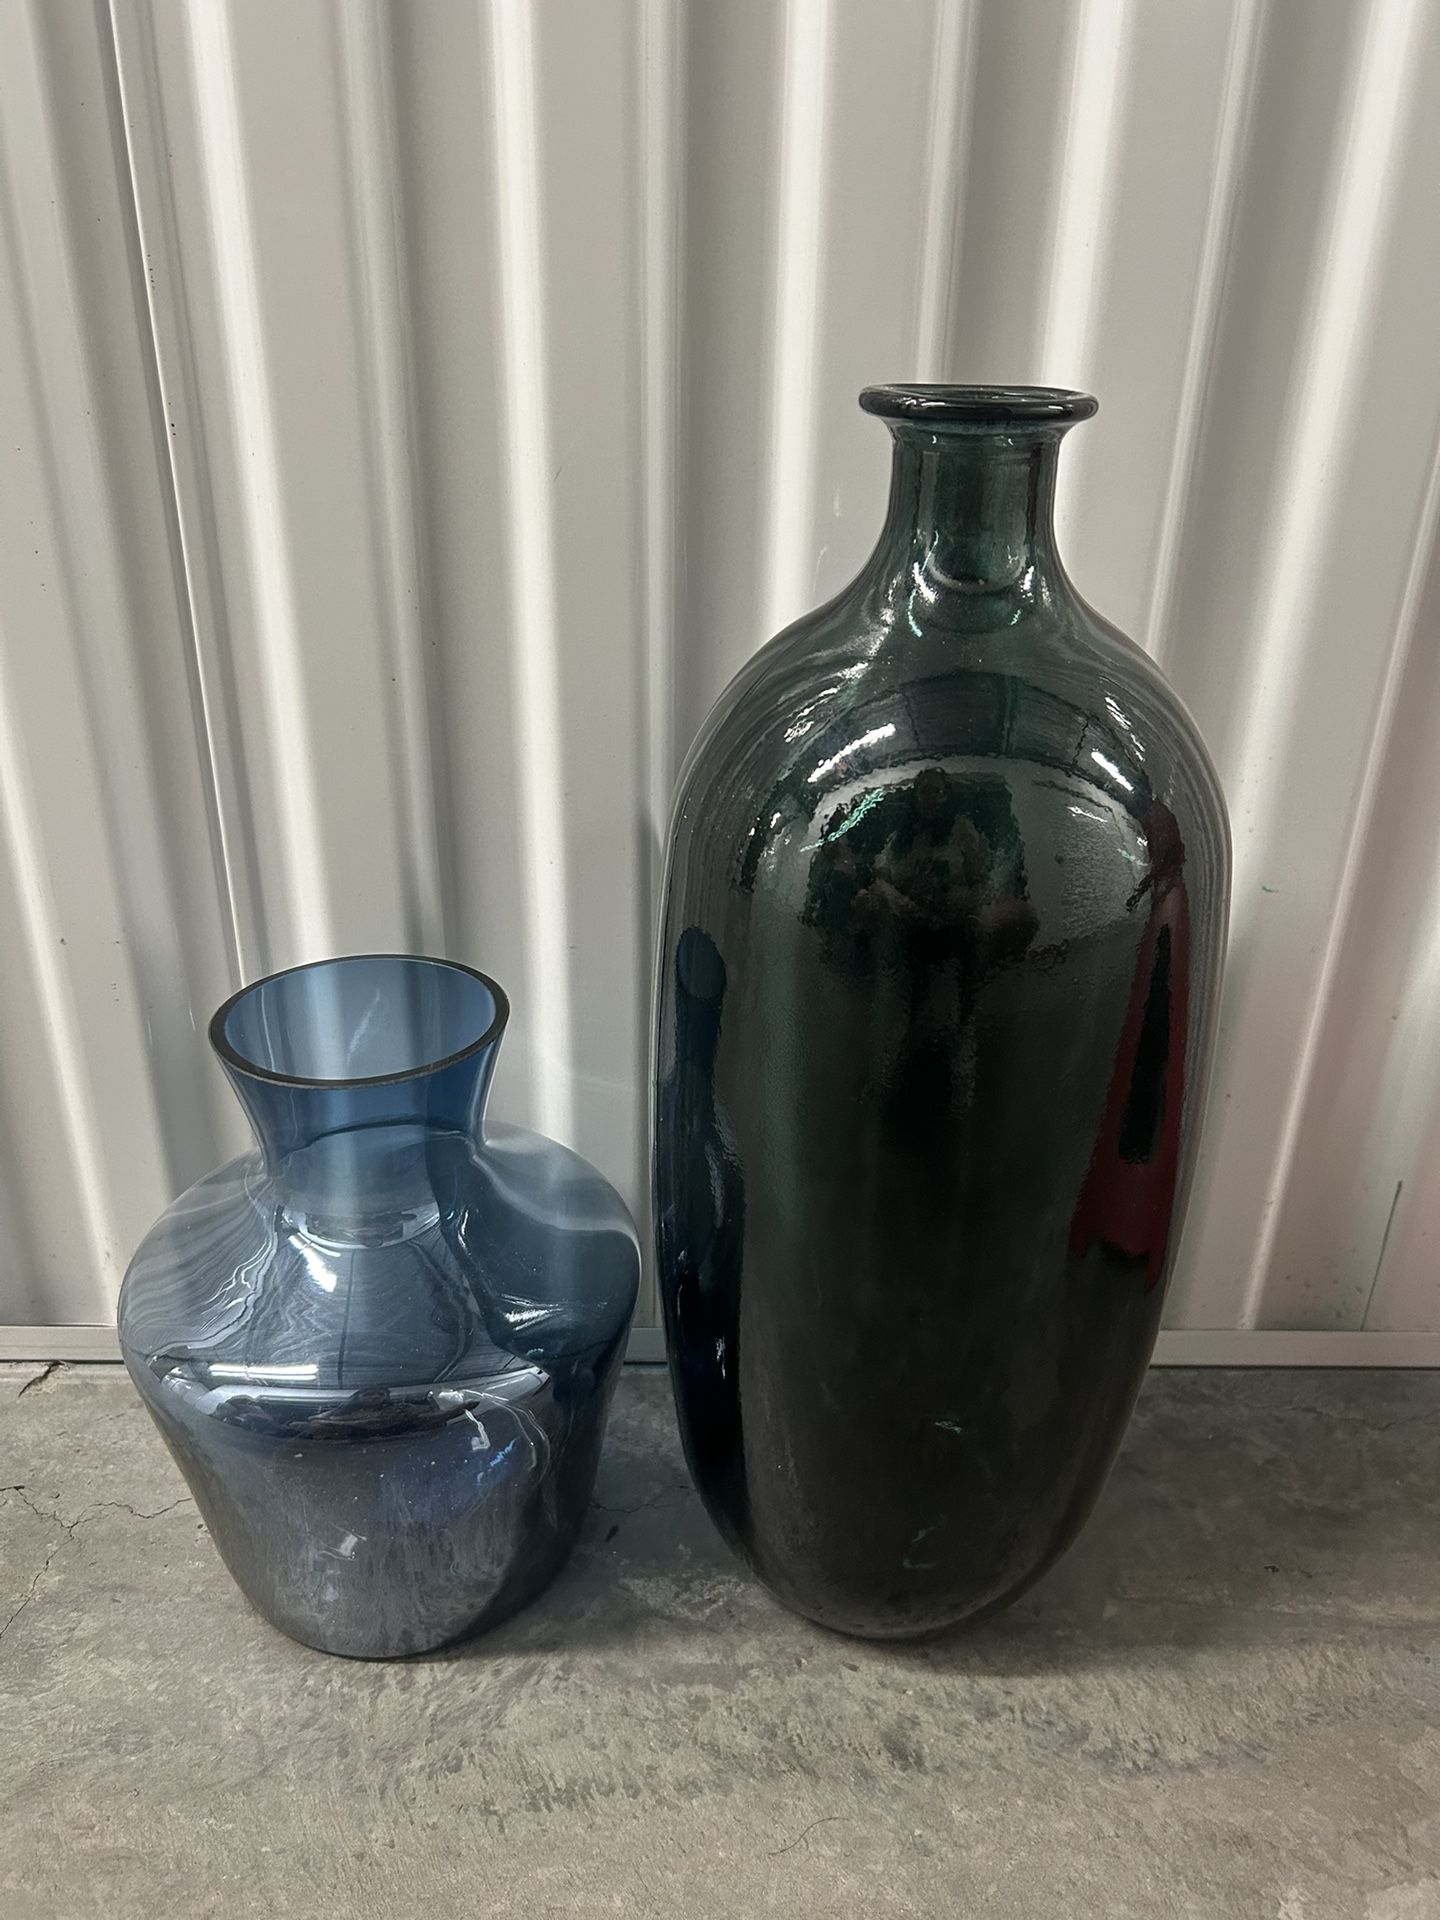 Vases $10 For Both 